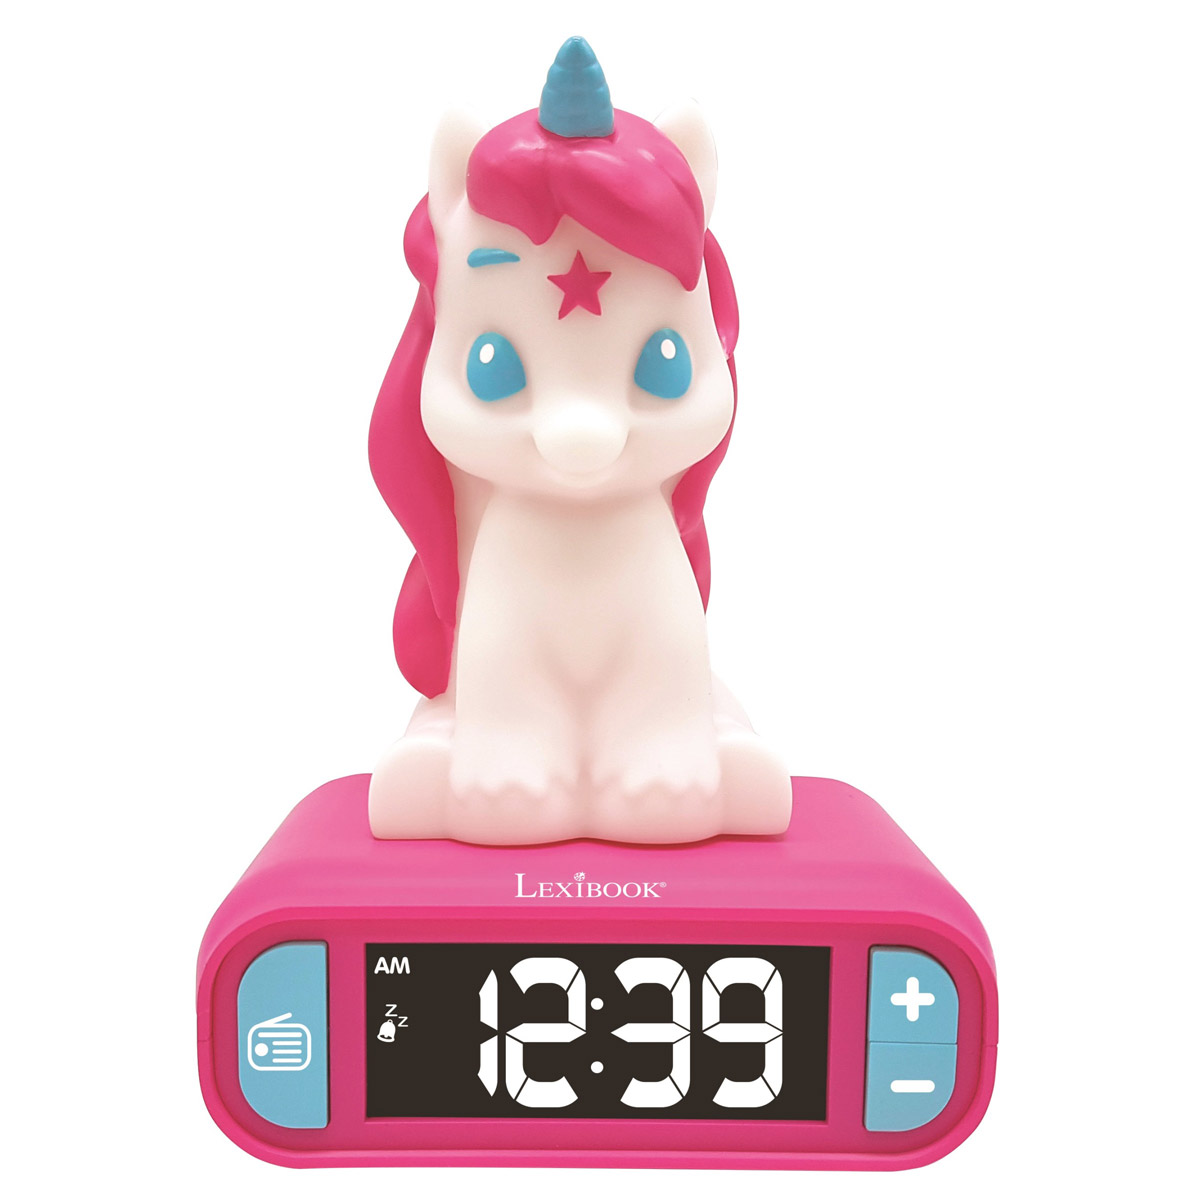 Lexibook - Unicorn Digital Alarm Clock for kids with Night Lightn Snooze and Radio, Childrens Clock, Luminous Unicorn, Pink colour - RL800UNI - image 1 of 8